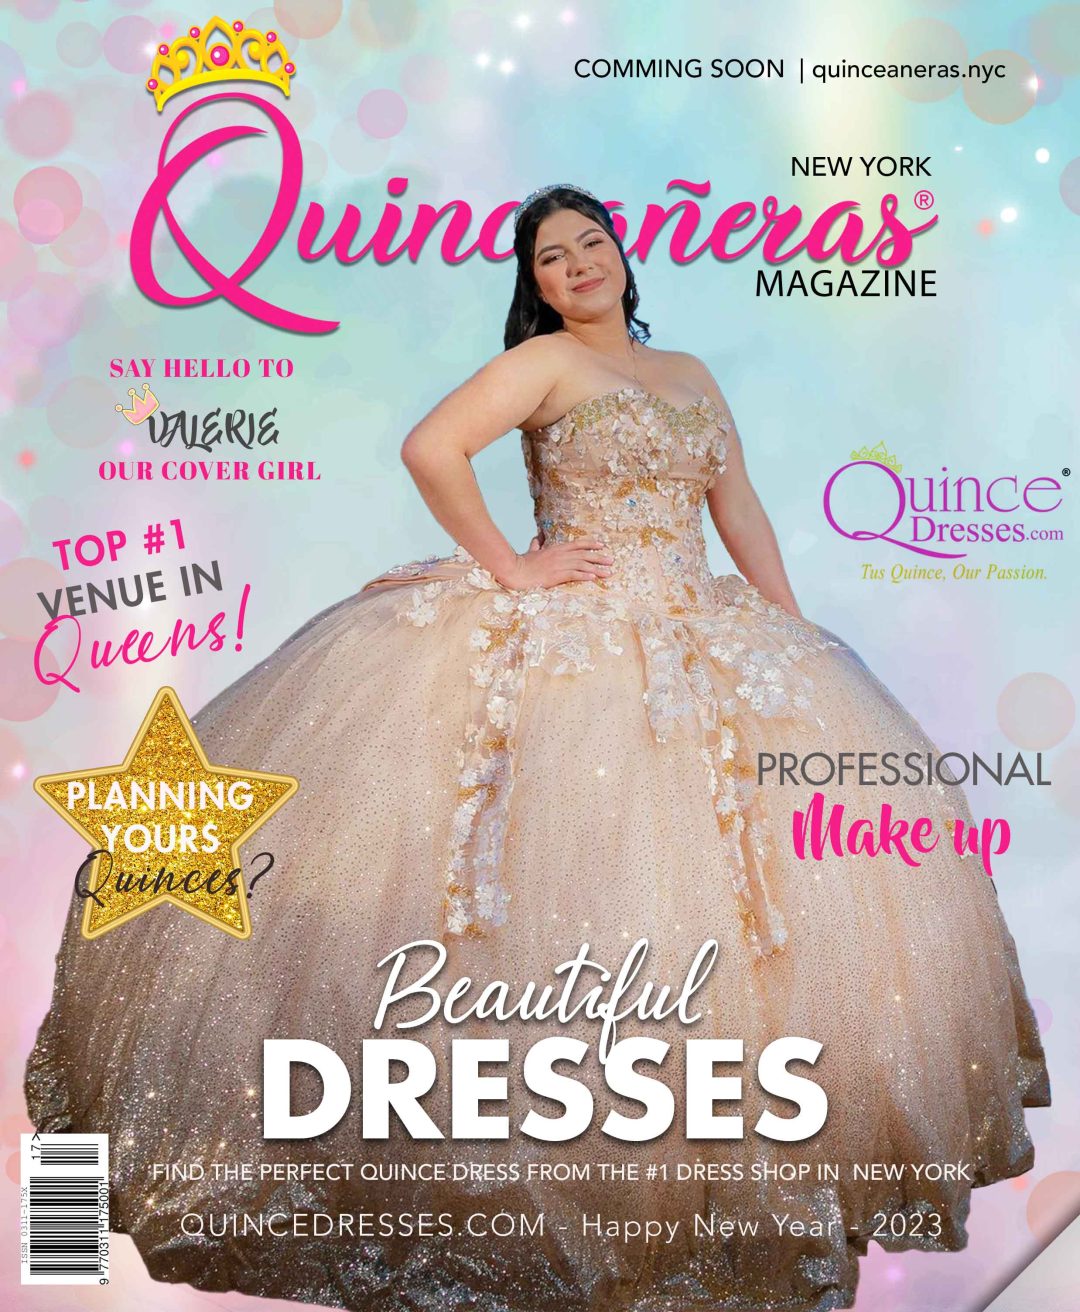 Quinceaneras Magazine New York